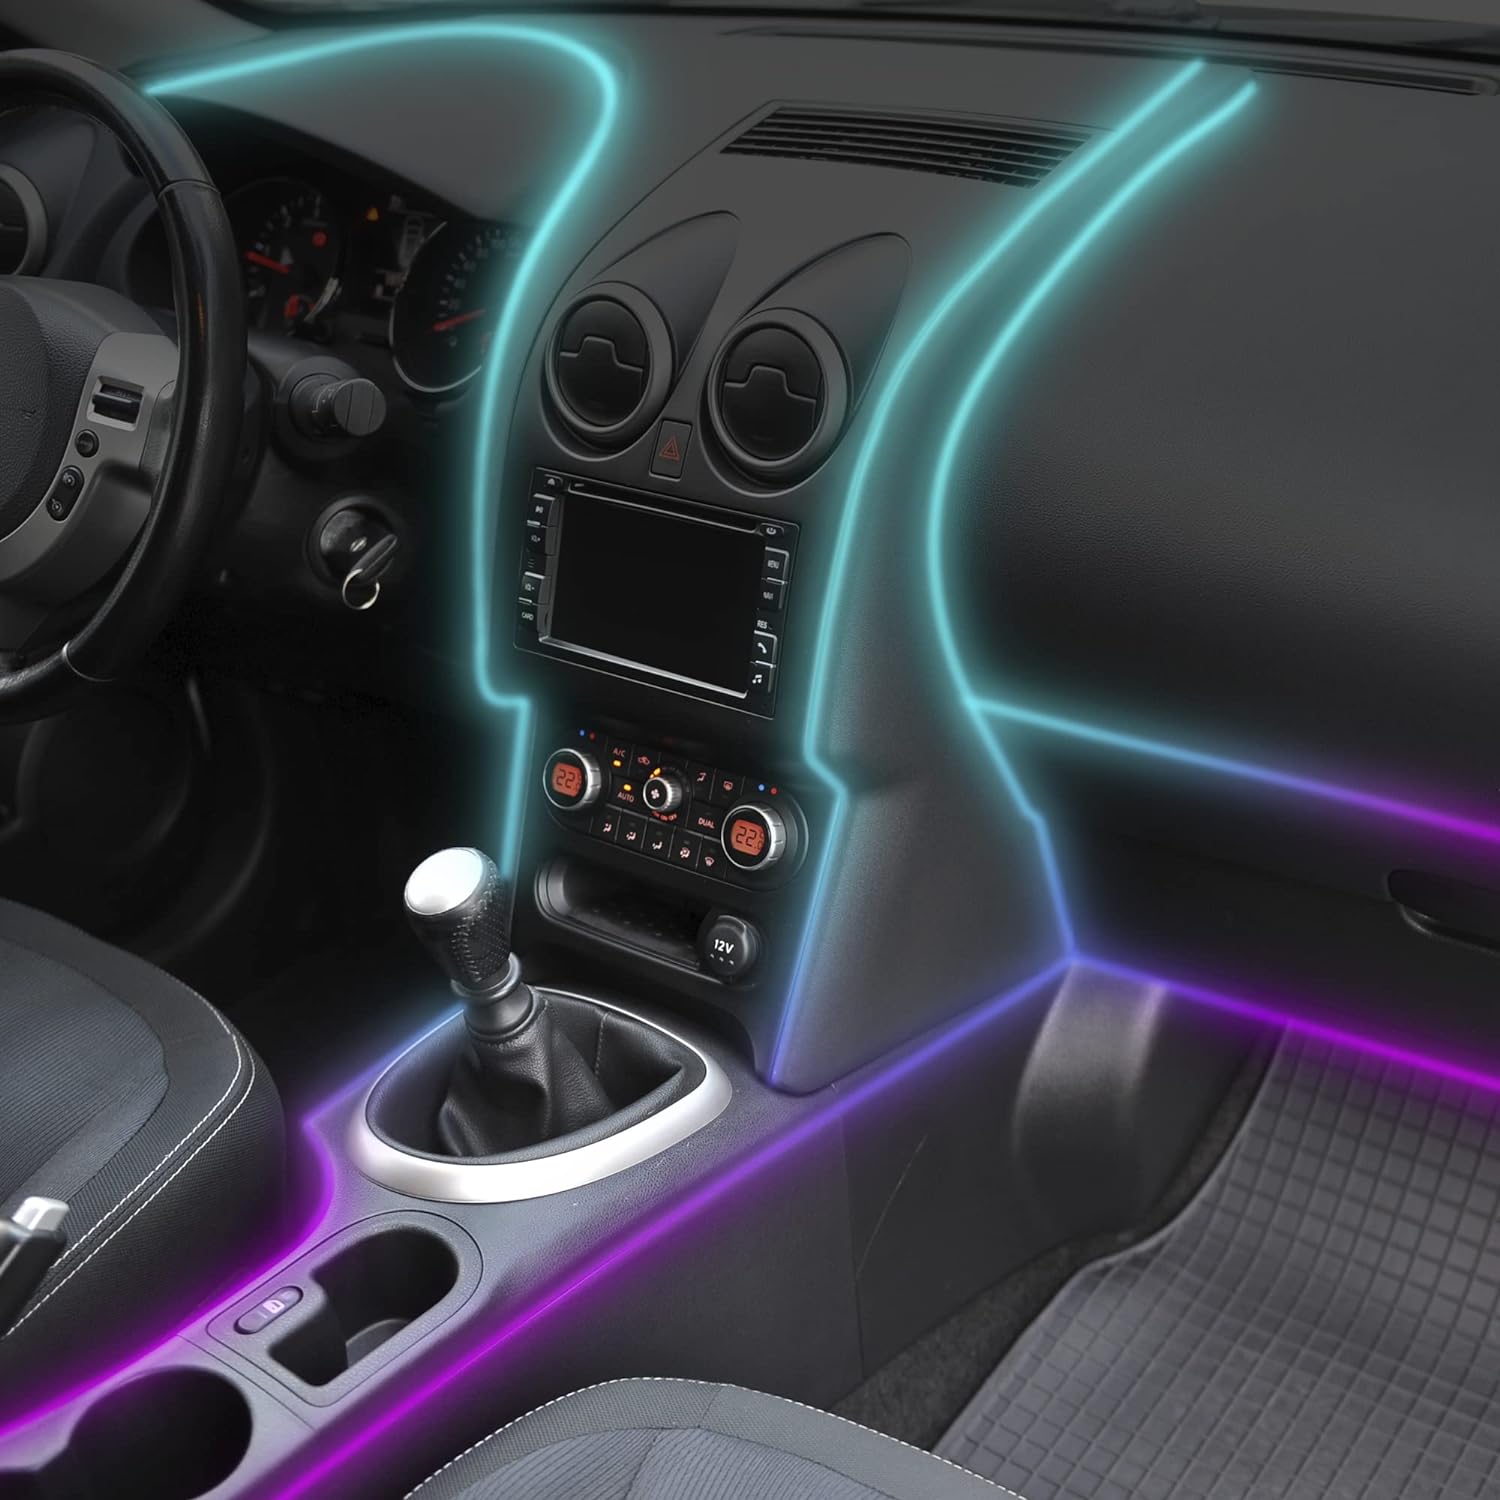 Jem Accessories Monster Bluetooth Sound Reactive RGB Fiber Optic Car Interior Lighting Kit, Use Remote/Downloadable App to Customize, Sound-Rea